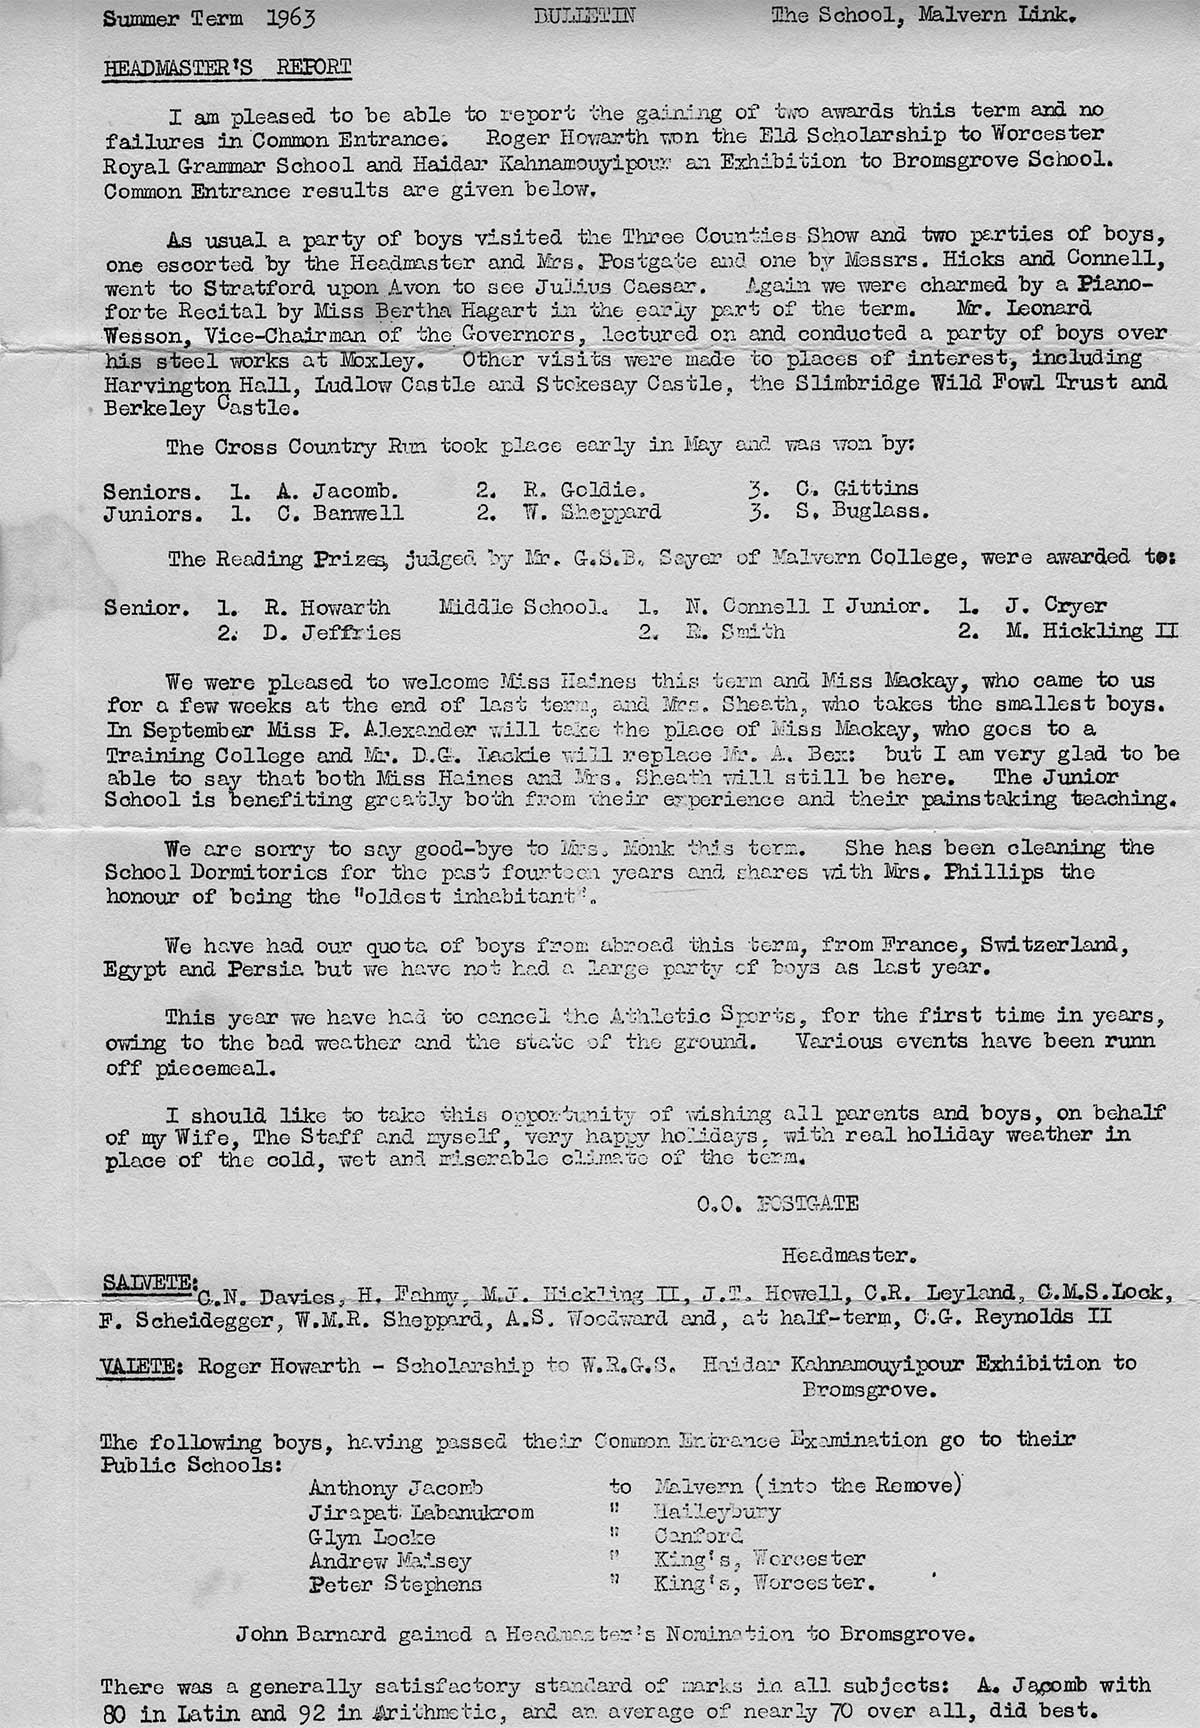 Link school headmaster's report page one 1963